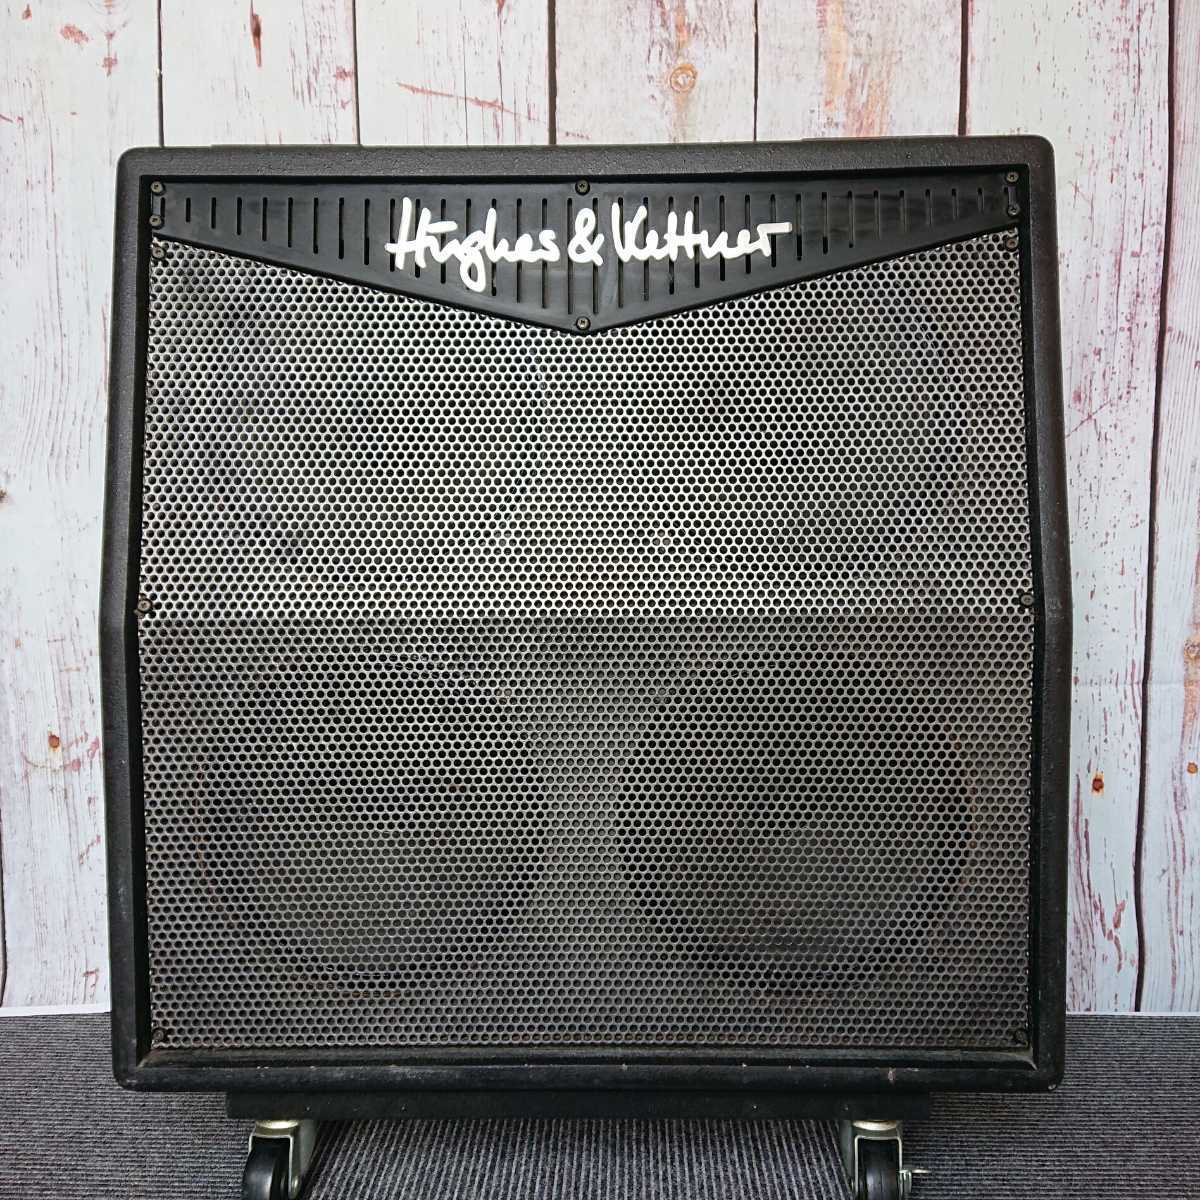 ★Hughes&Kettner triamp cabinet 412 100watts 4Ω 4Ω ヒュース&ケトナー★ギターアンプ ギターキャビネット